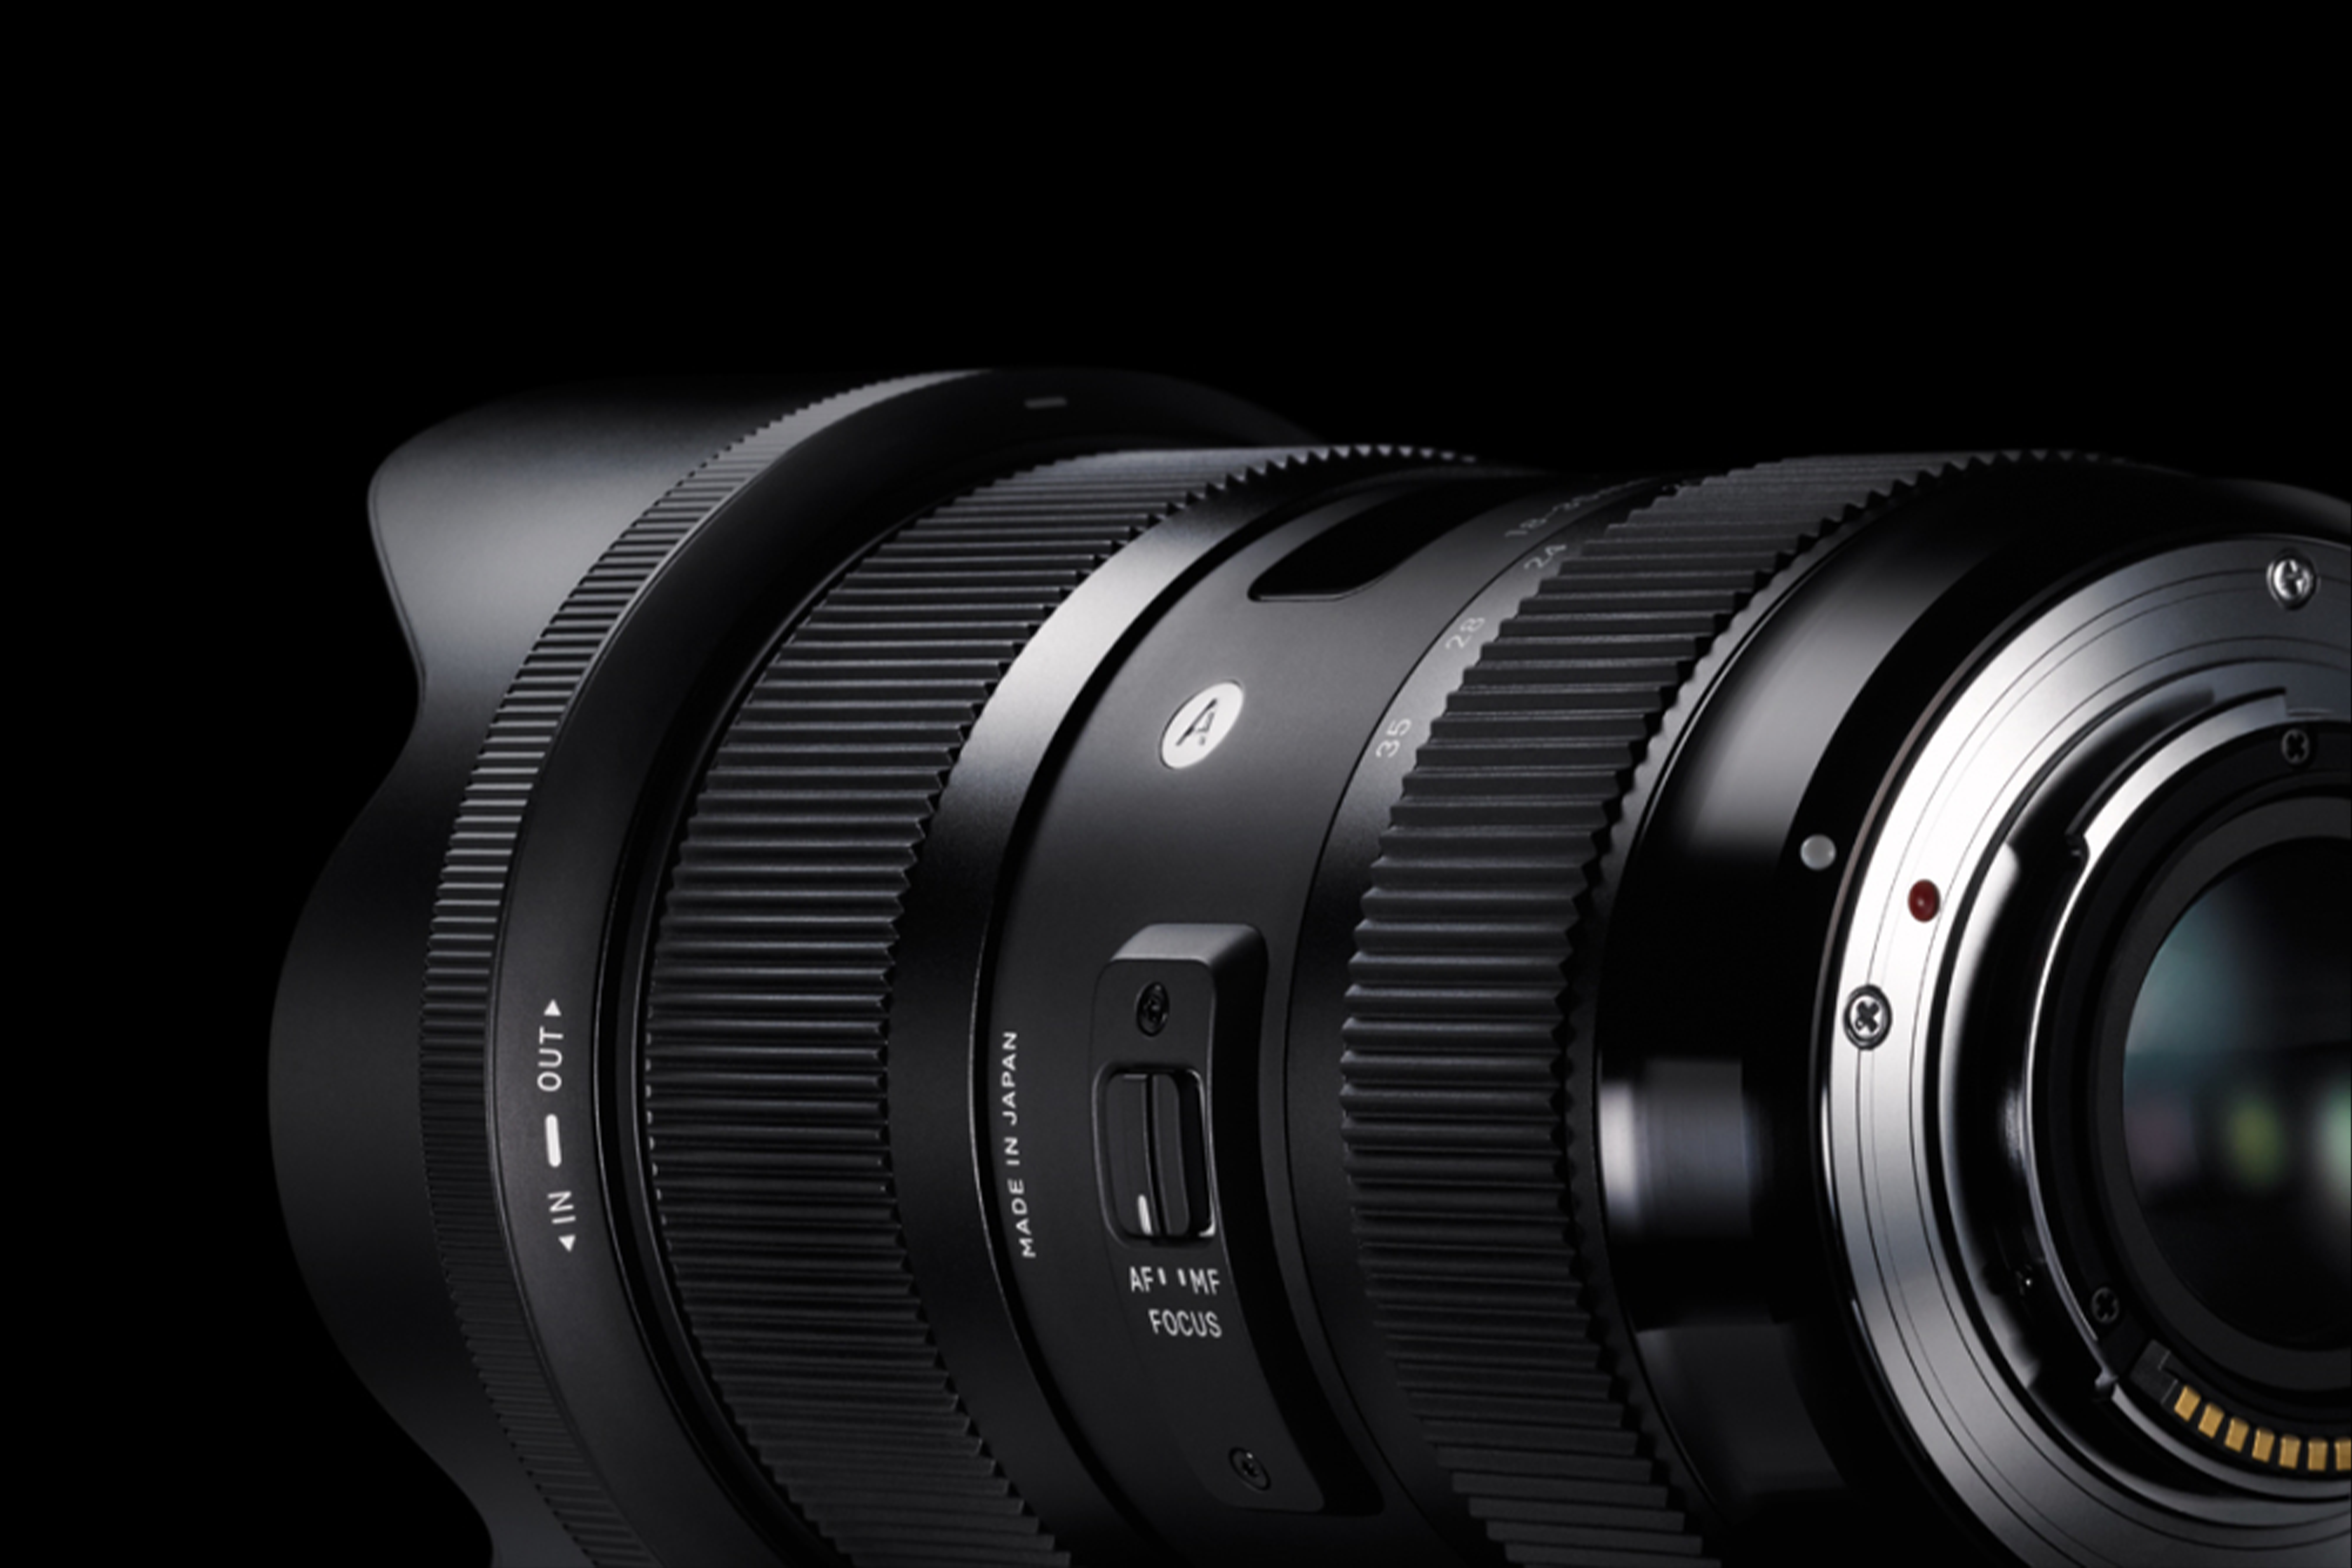 The definitive large-aperture APS-C format standard zoom lens.